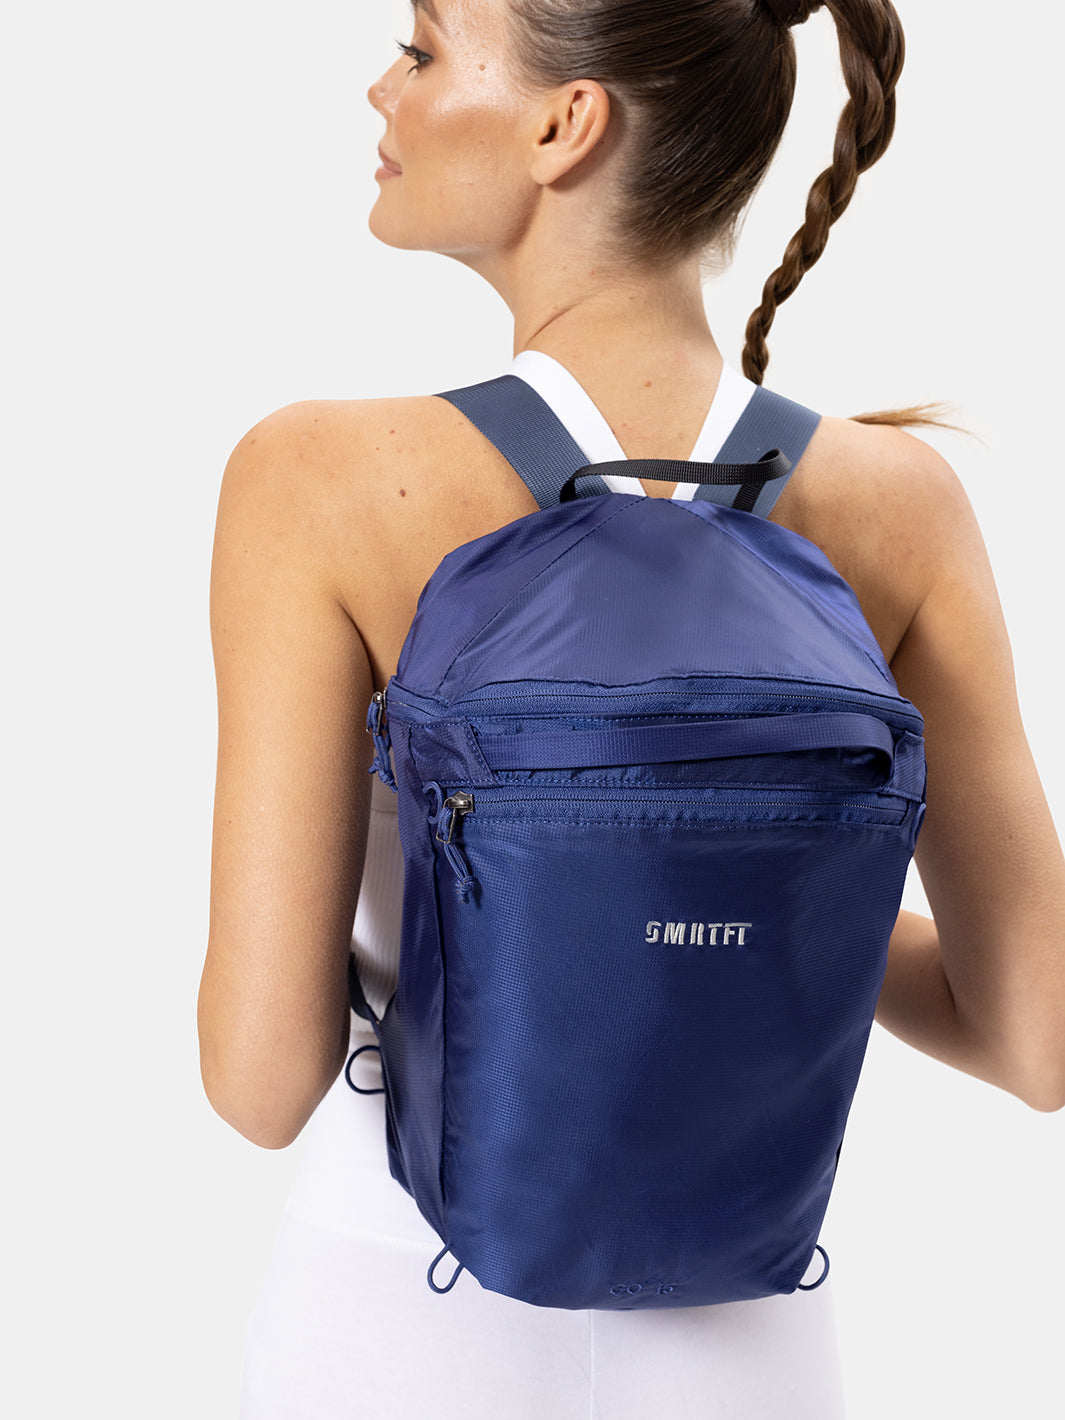 Blue Navy Backpack For Women at SMRTFT | Blue Backpack For Women